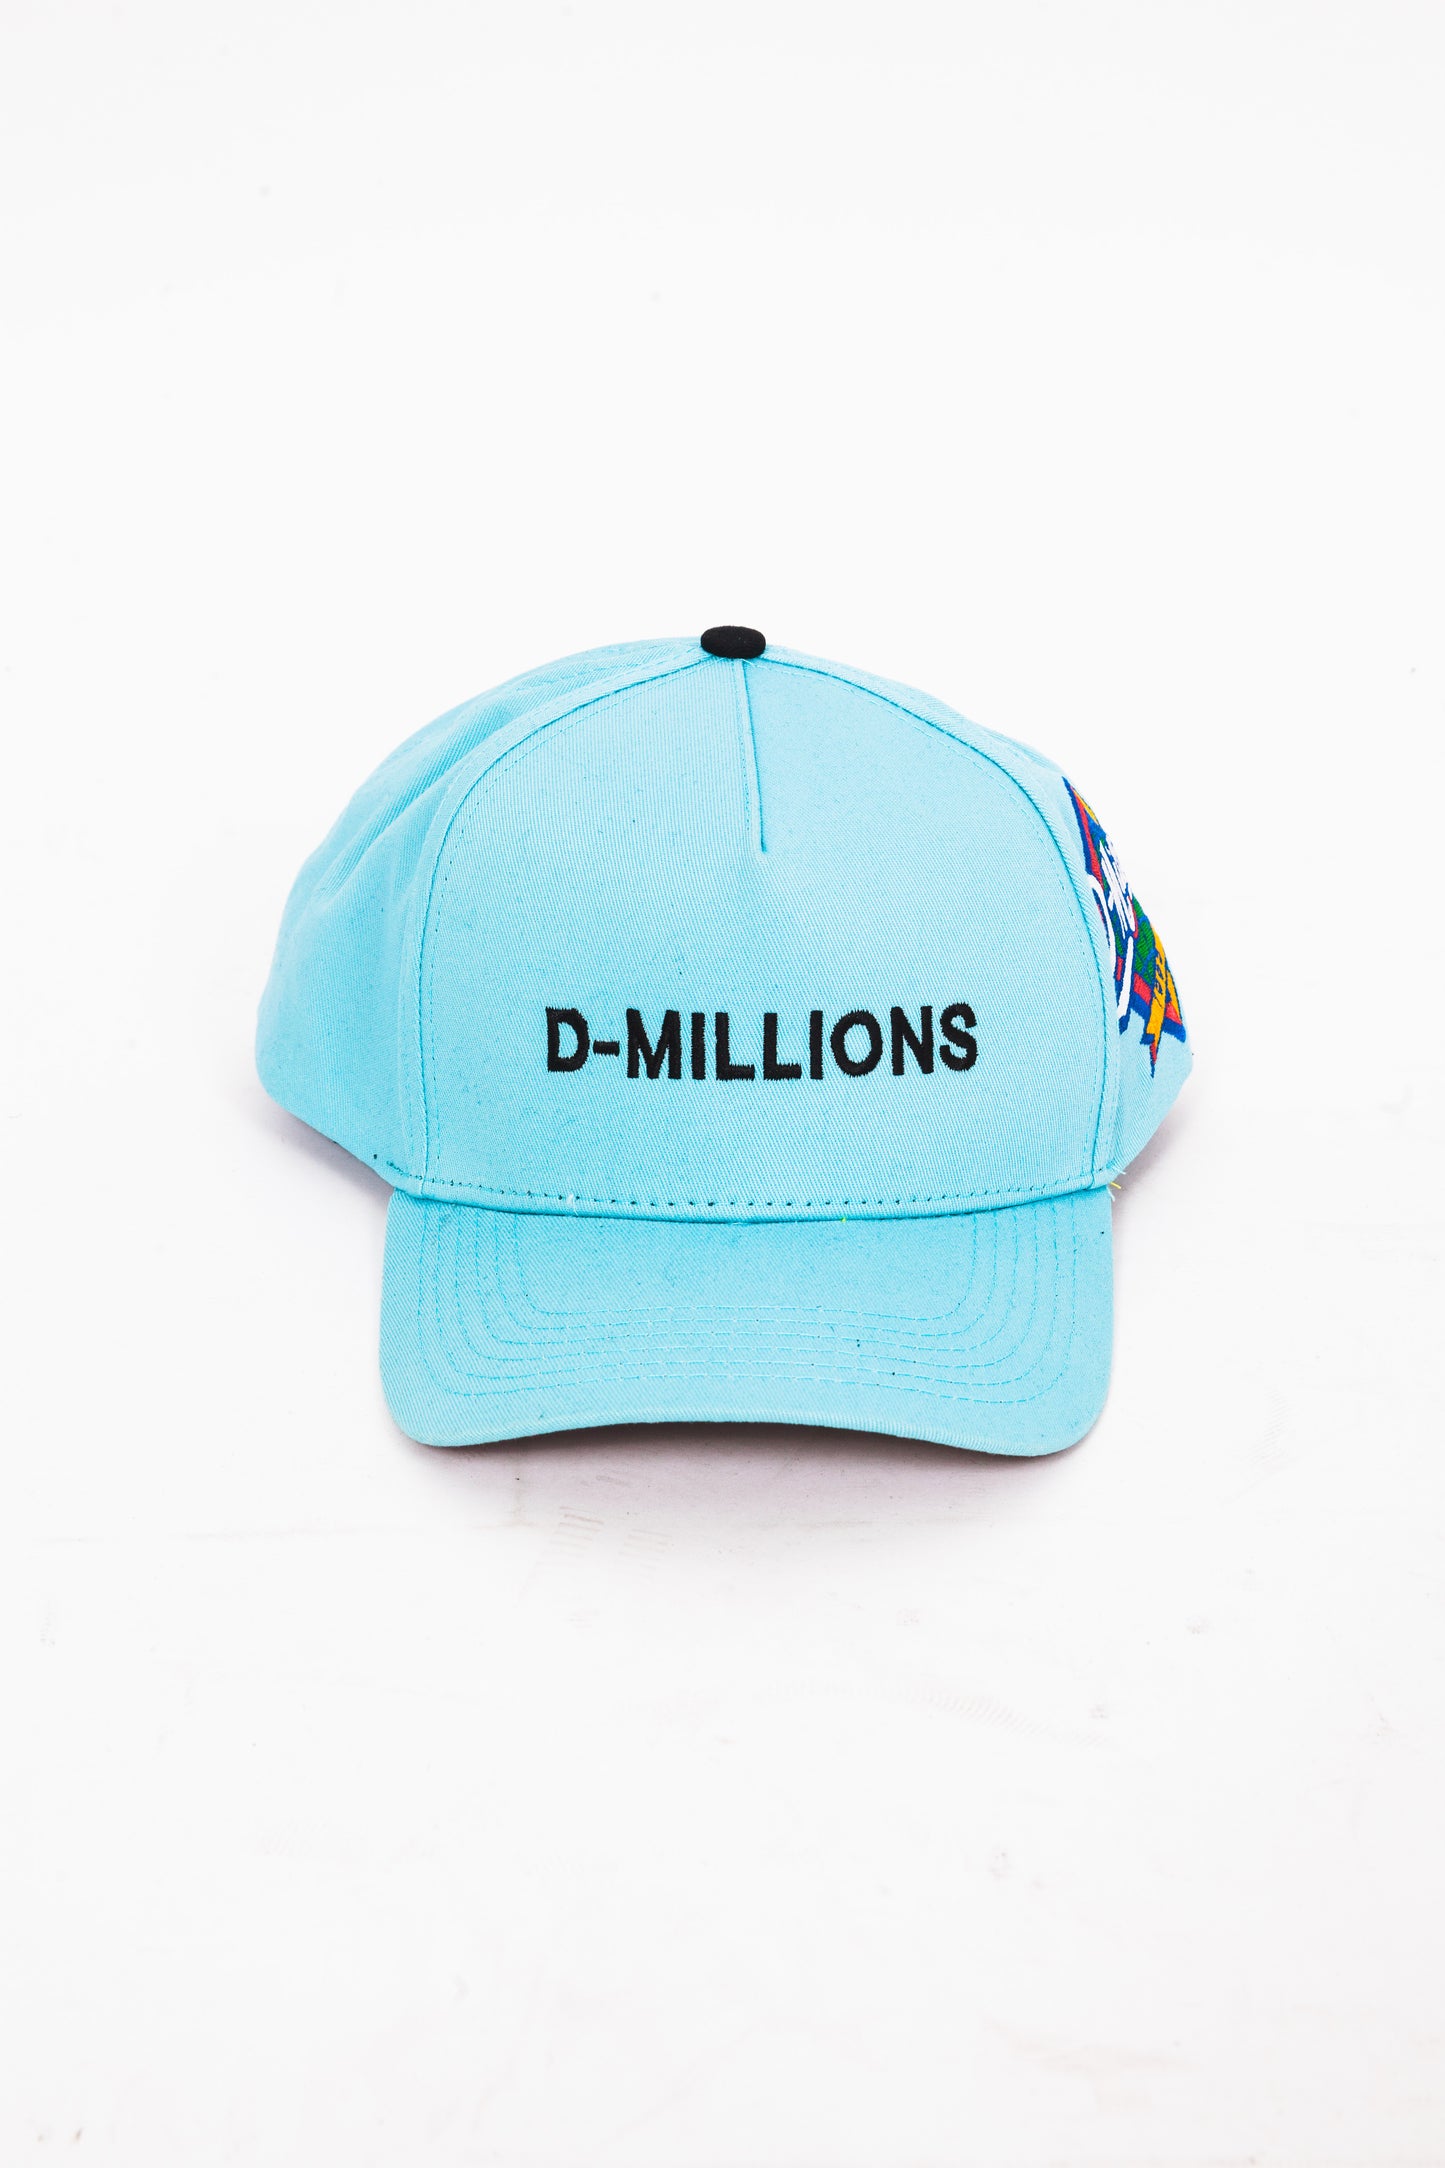 Baseball Cap D-Millions Turquoise